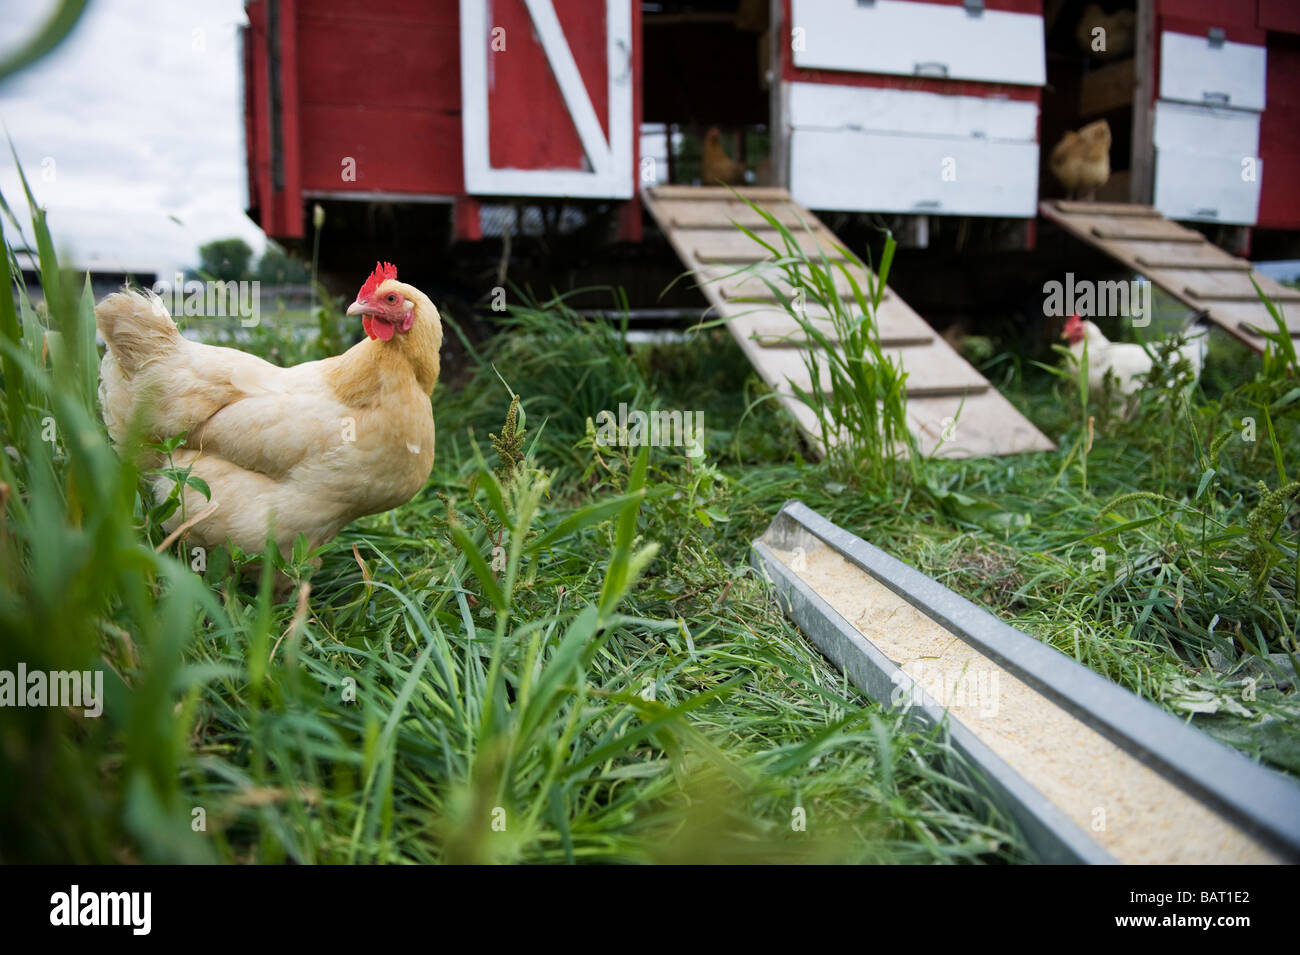 A free-range chicken roams around a grassy field. Stock Photo